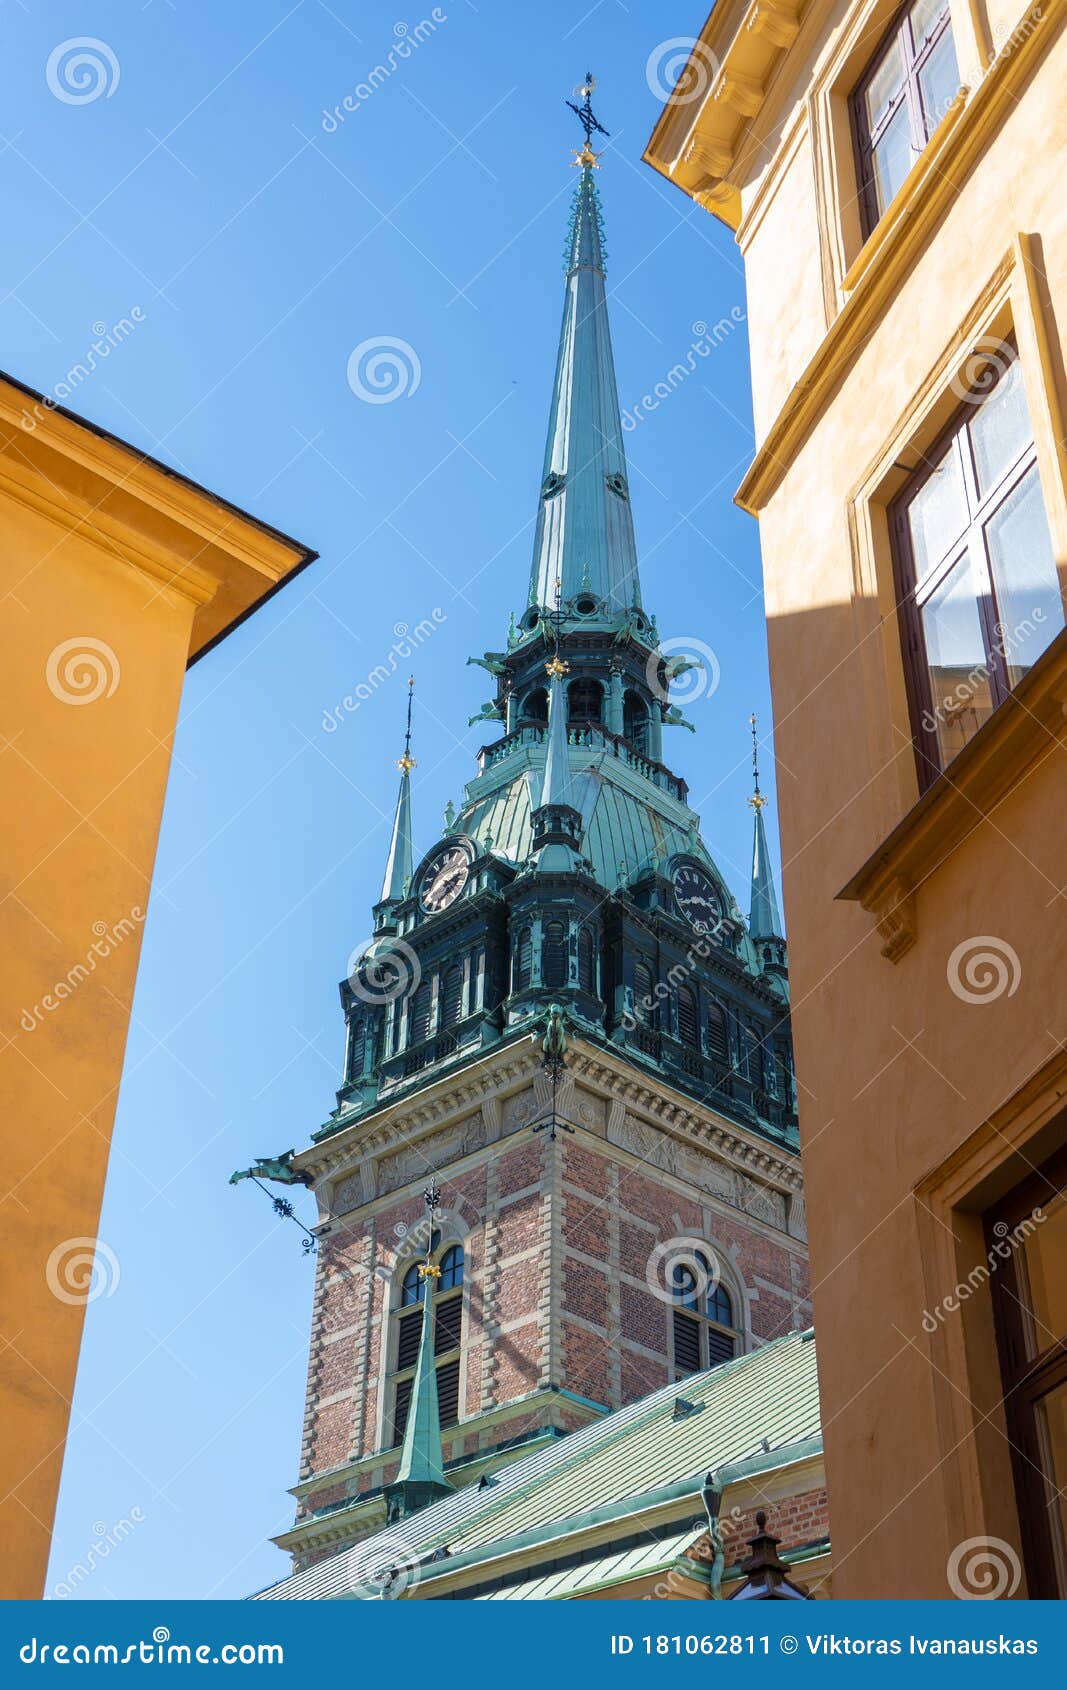 view with the german church tyska kyrkan, sometimes called st. gertrude`s church sankta gertruds kyrka